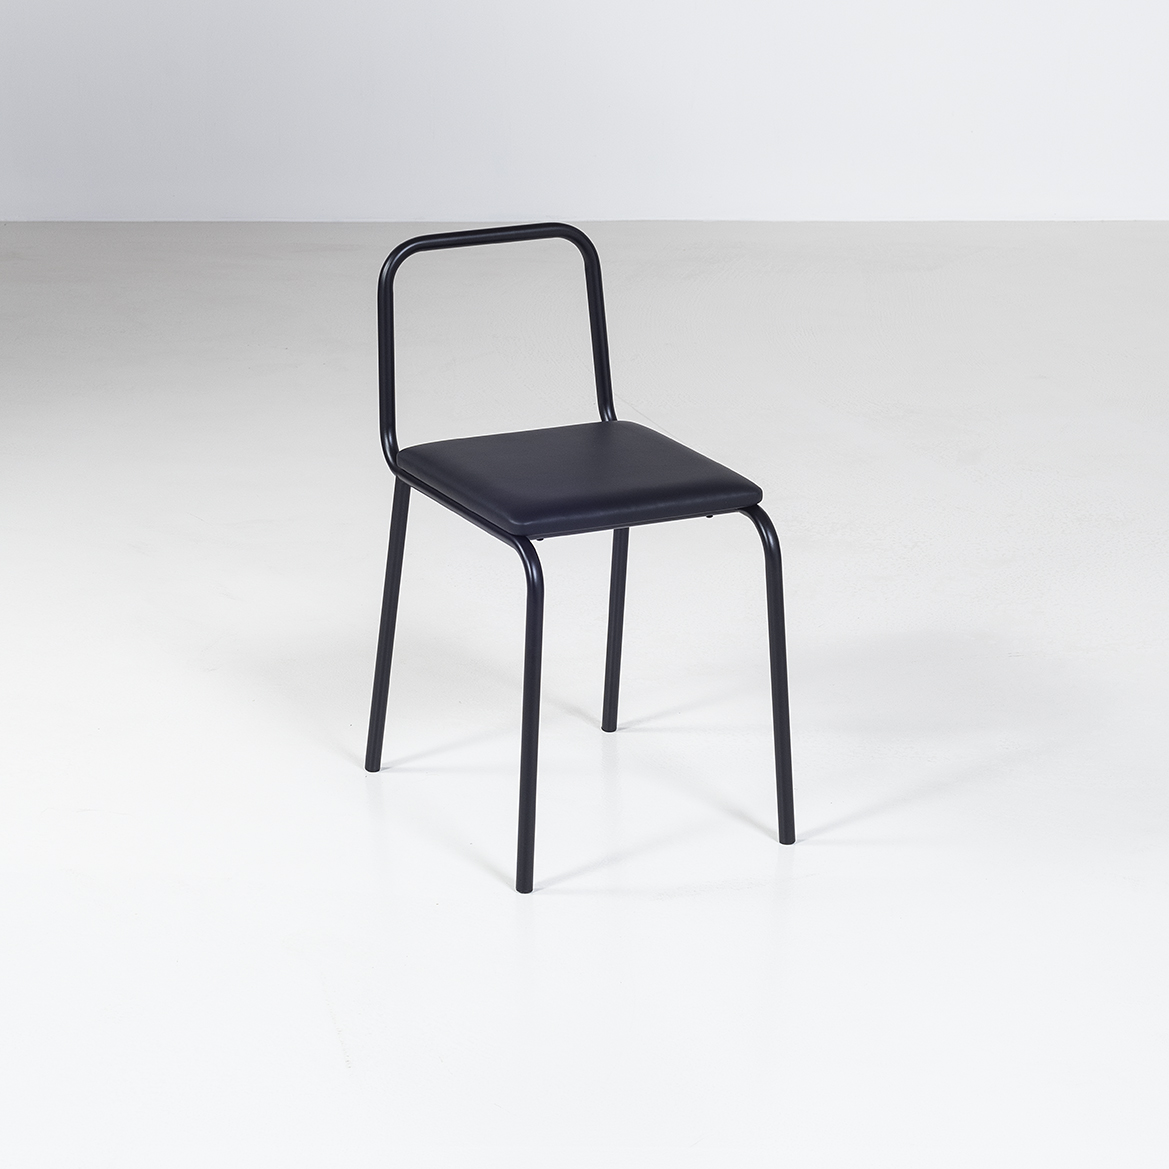 The CDG8 Chair #1 ‘Black Market’, originally designed by Rei Kawakubo